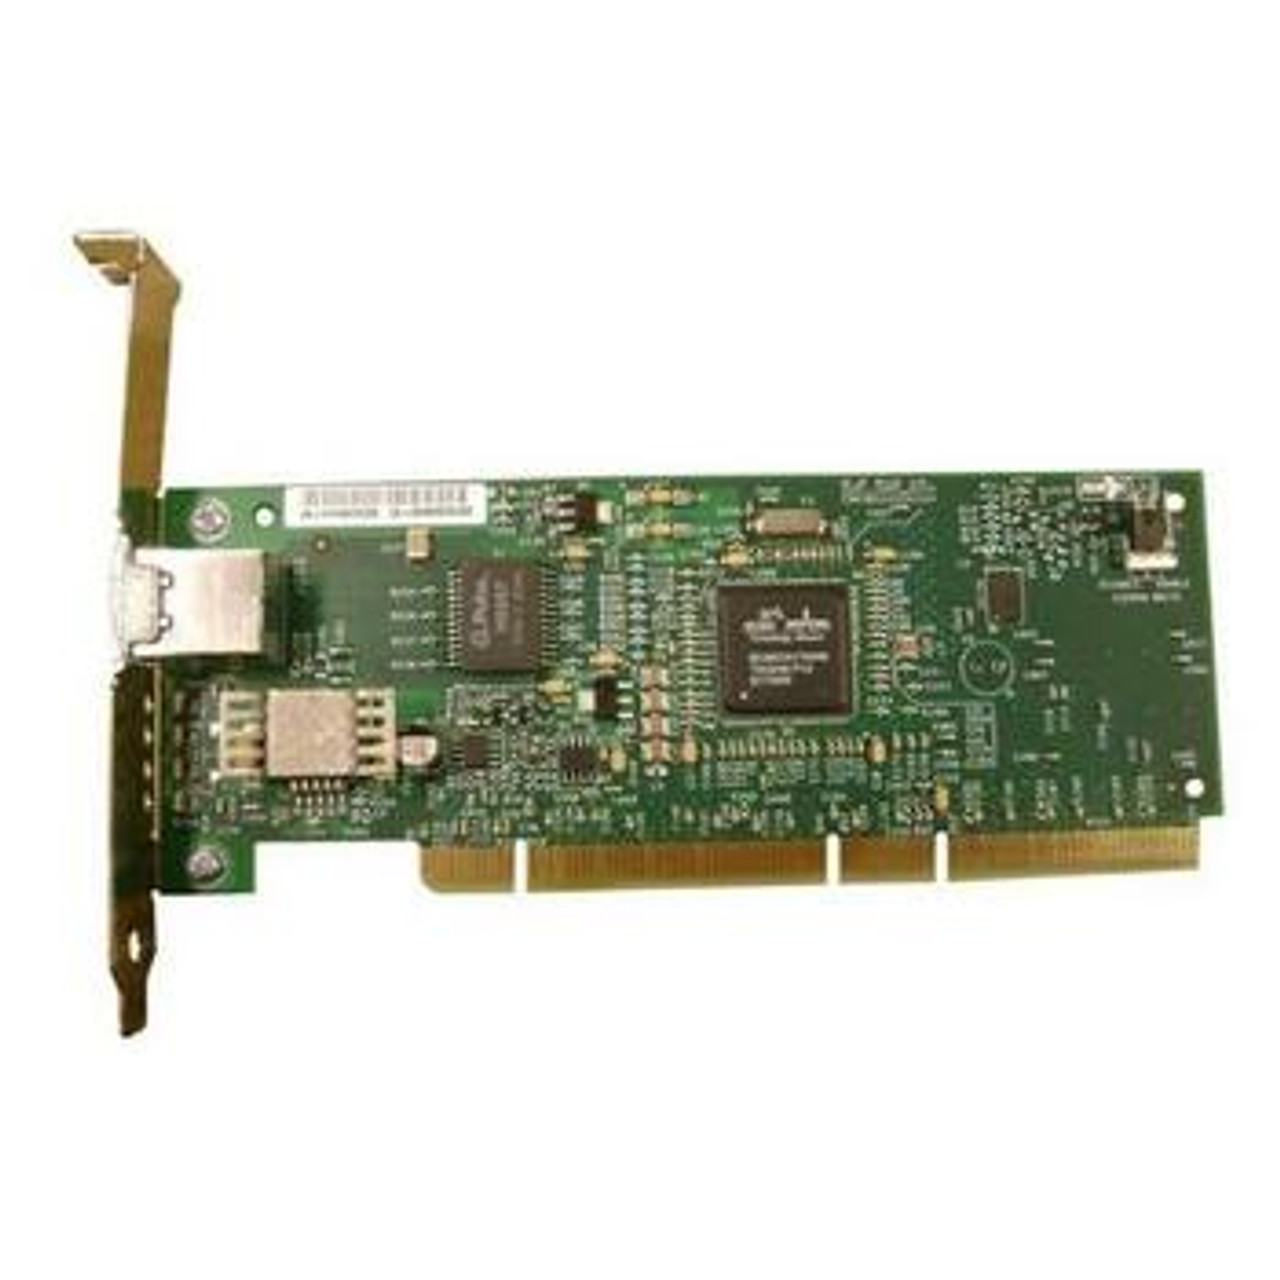 284685-003 HP NC7770 PCI-X 64-Bit 133MHz 10/100/1000Mbps Gigabit Ethernet Network Interface Card (NIC)